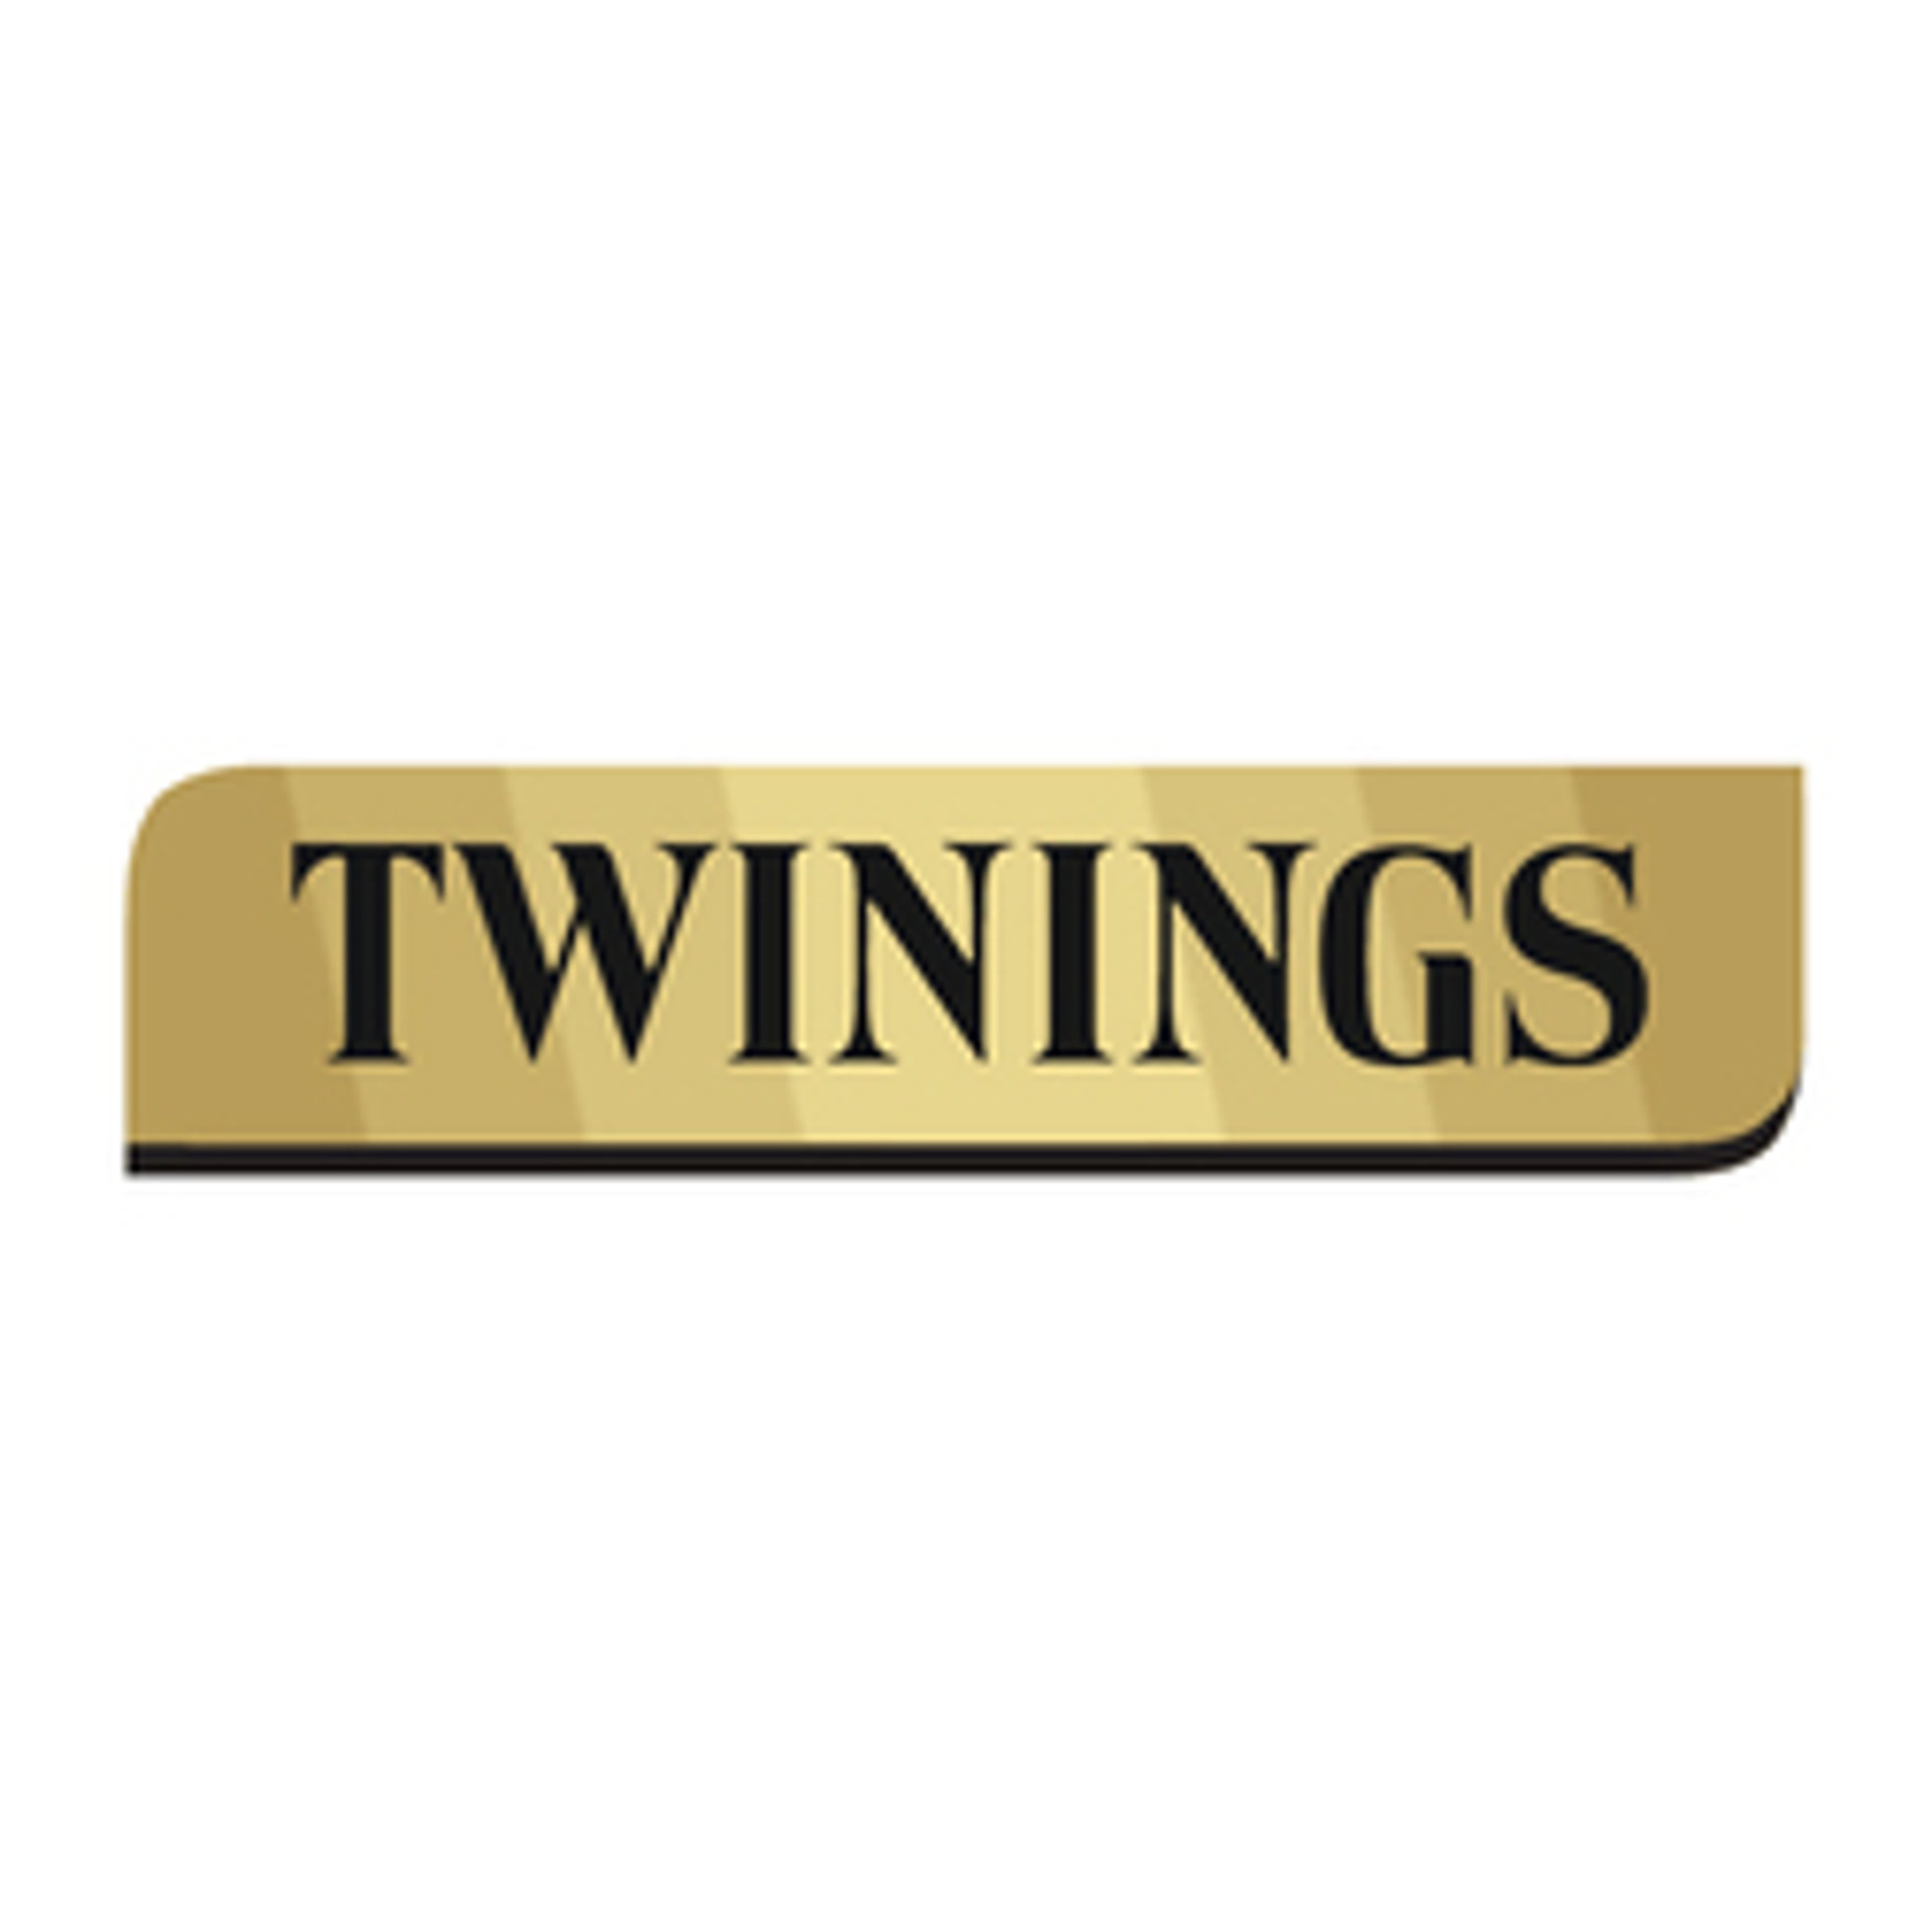  Twinings 